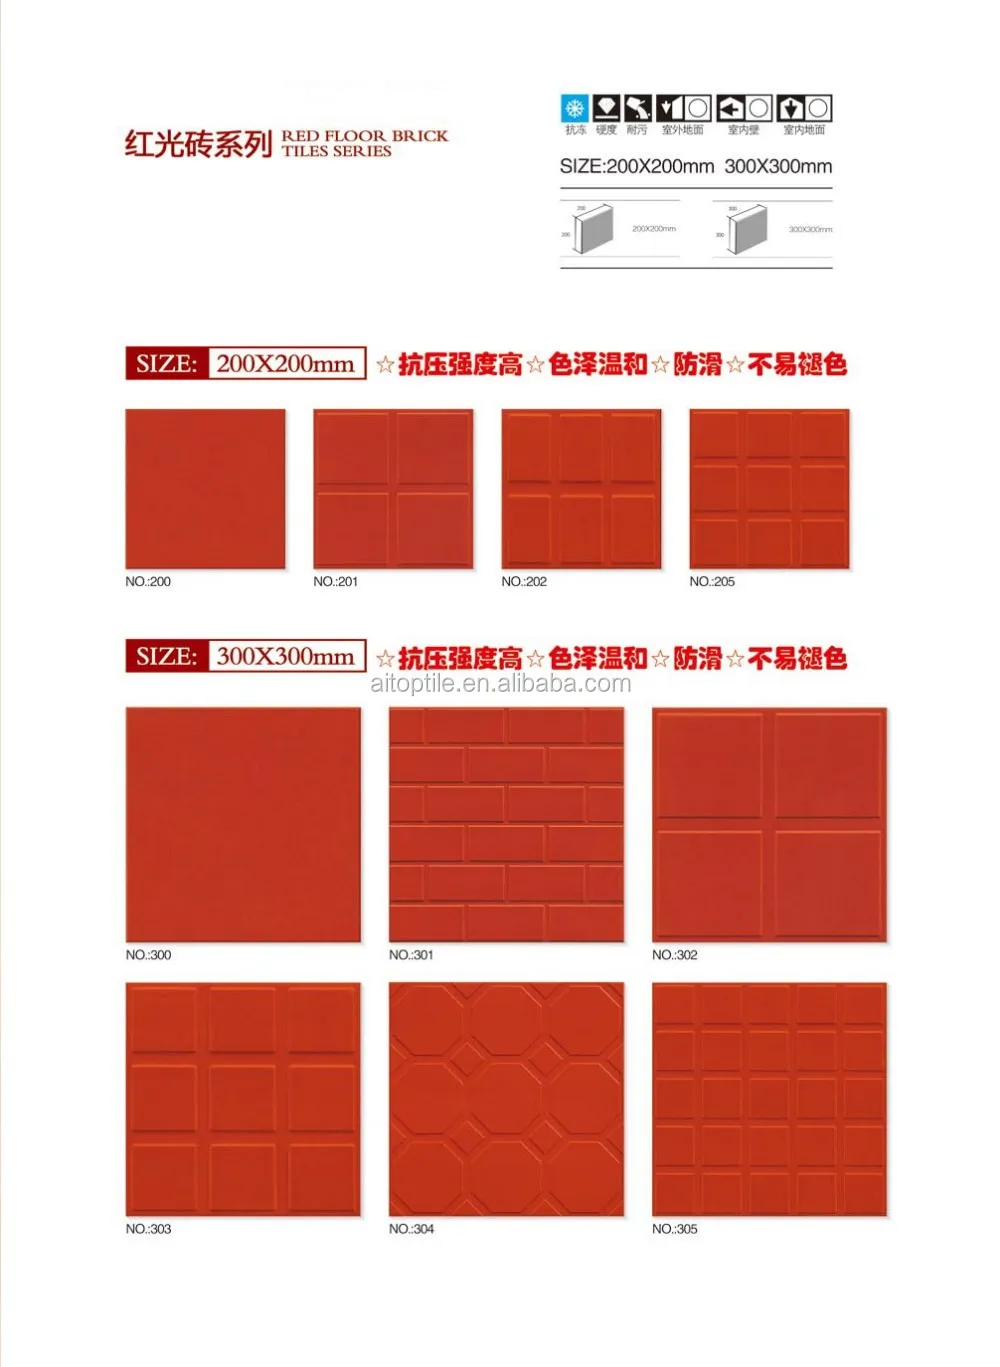 Terracotta Red Clay Floor Tile 30x30 - Buy Red Clay Floor Tile,Red Tile